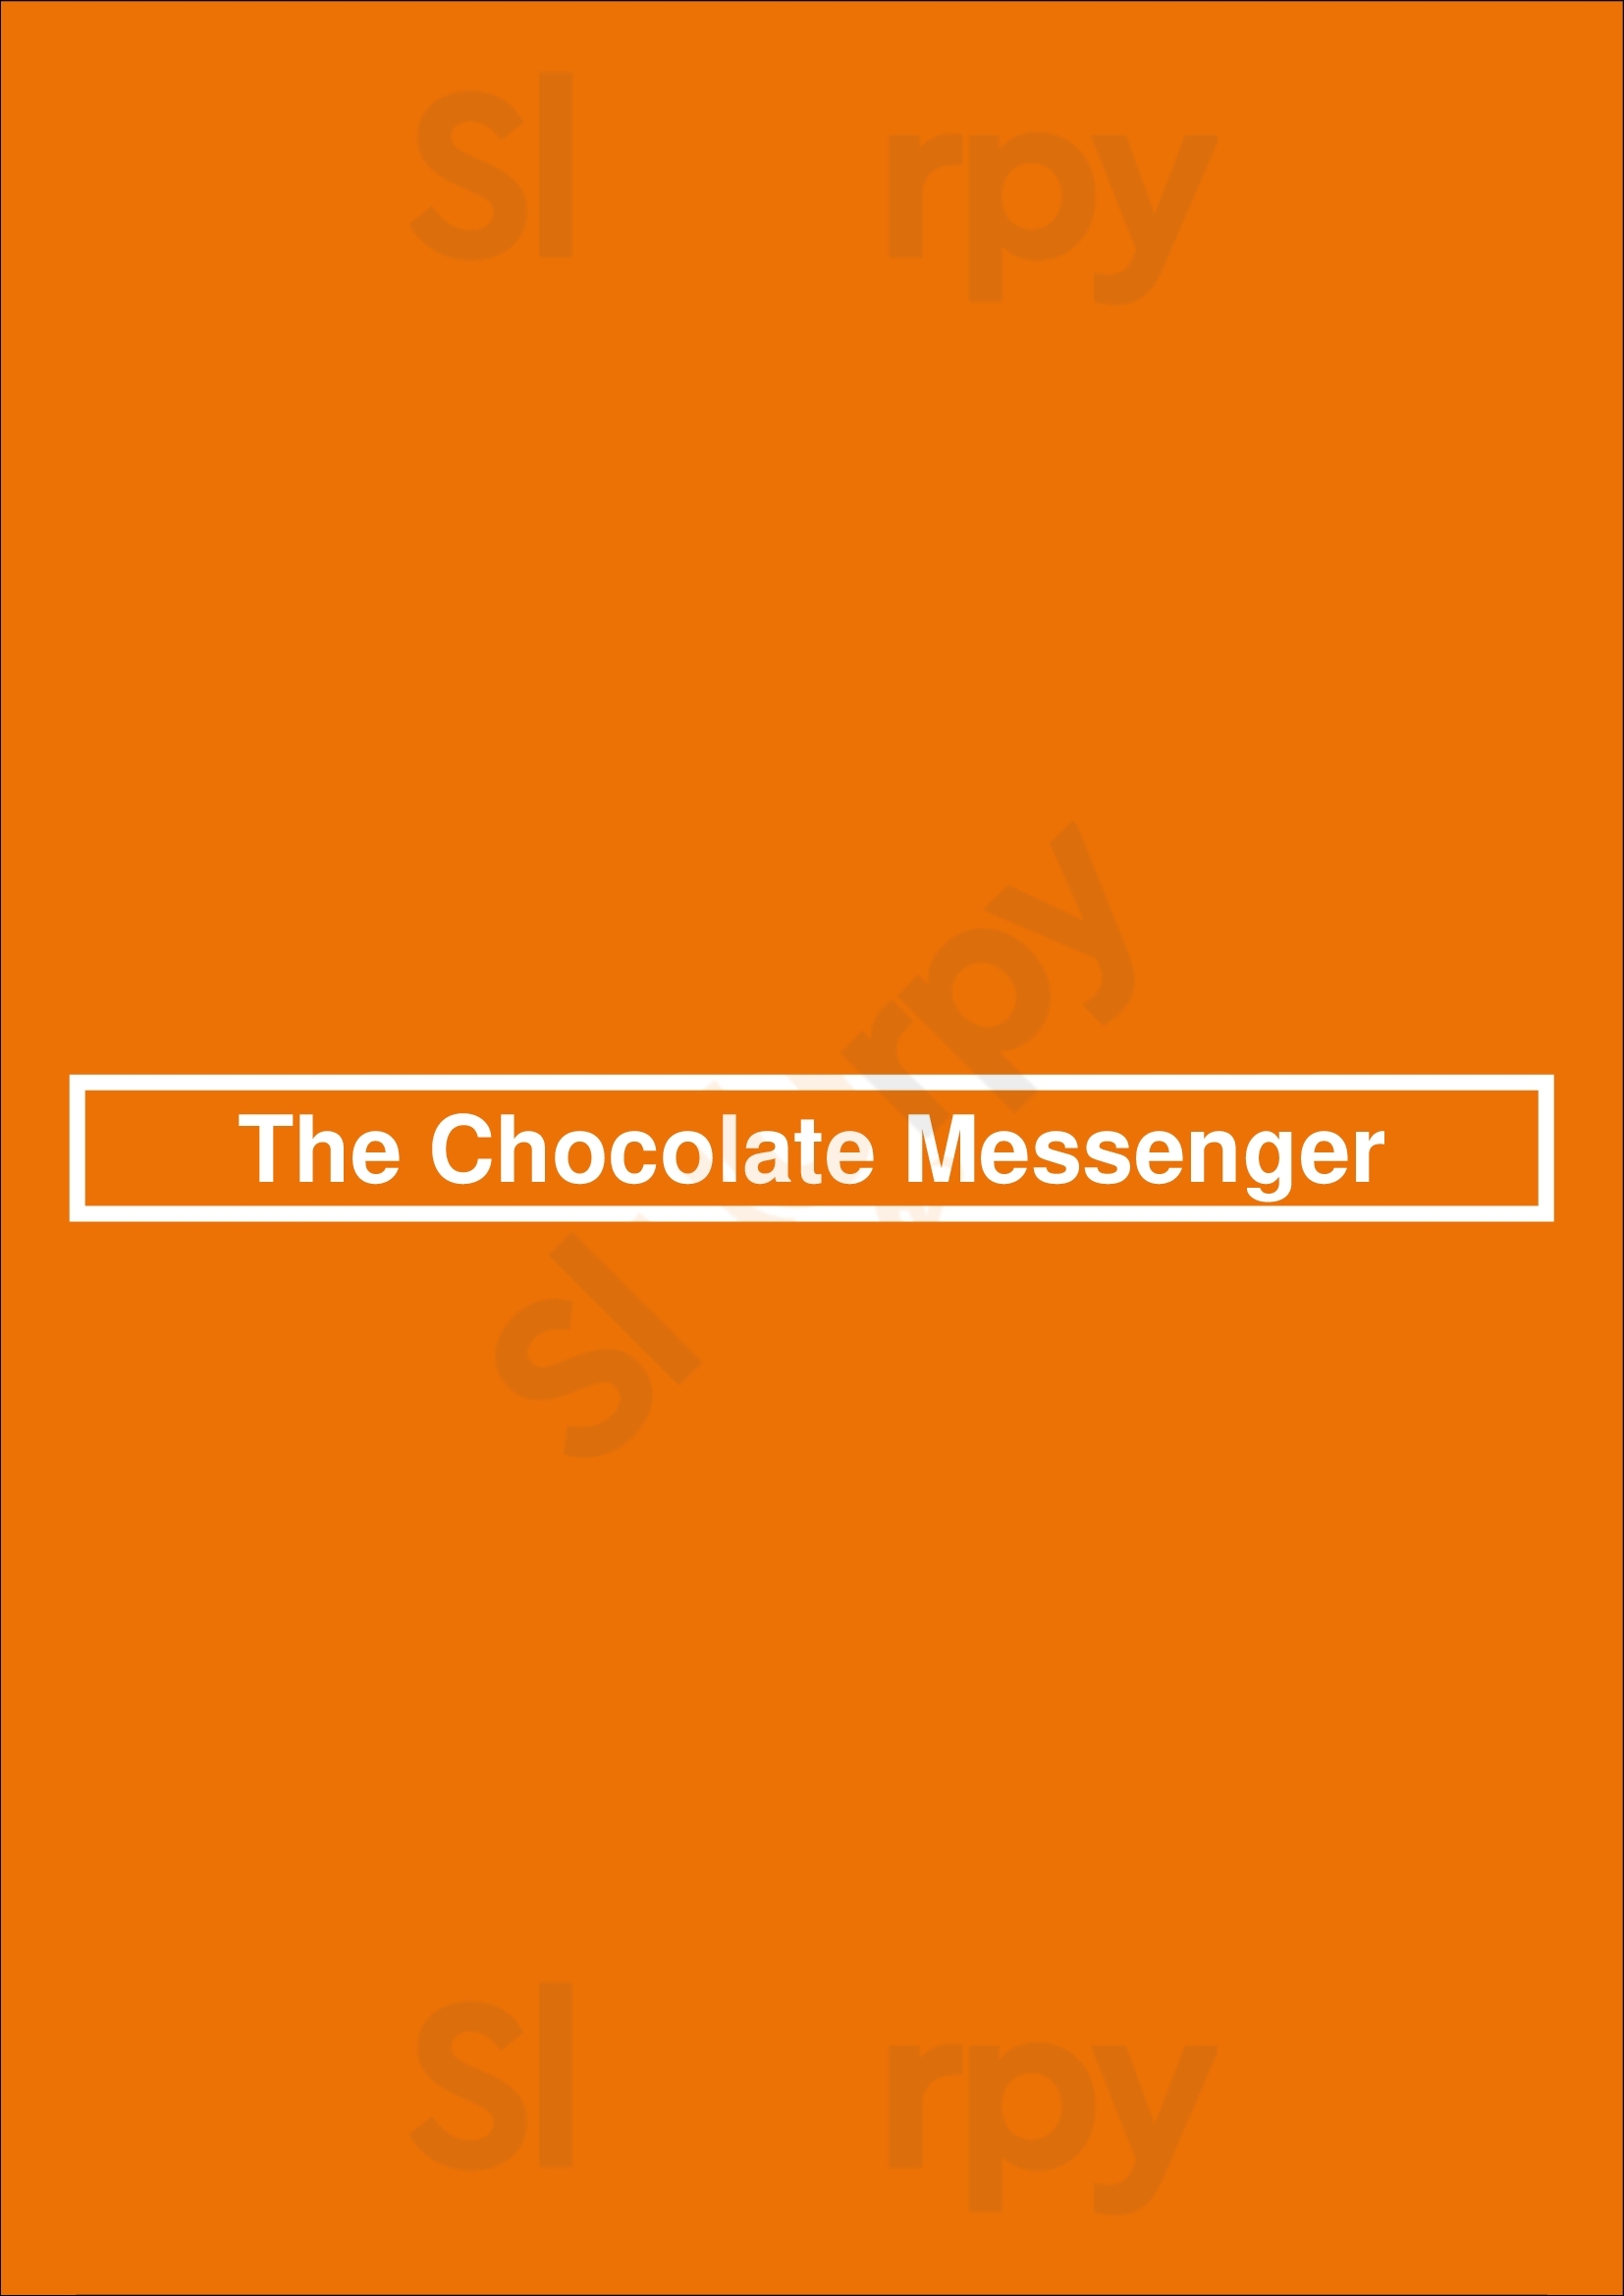 The Chocolate Messenger Toronto Menu - 1